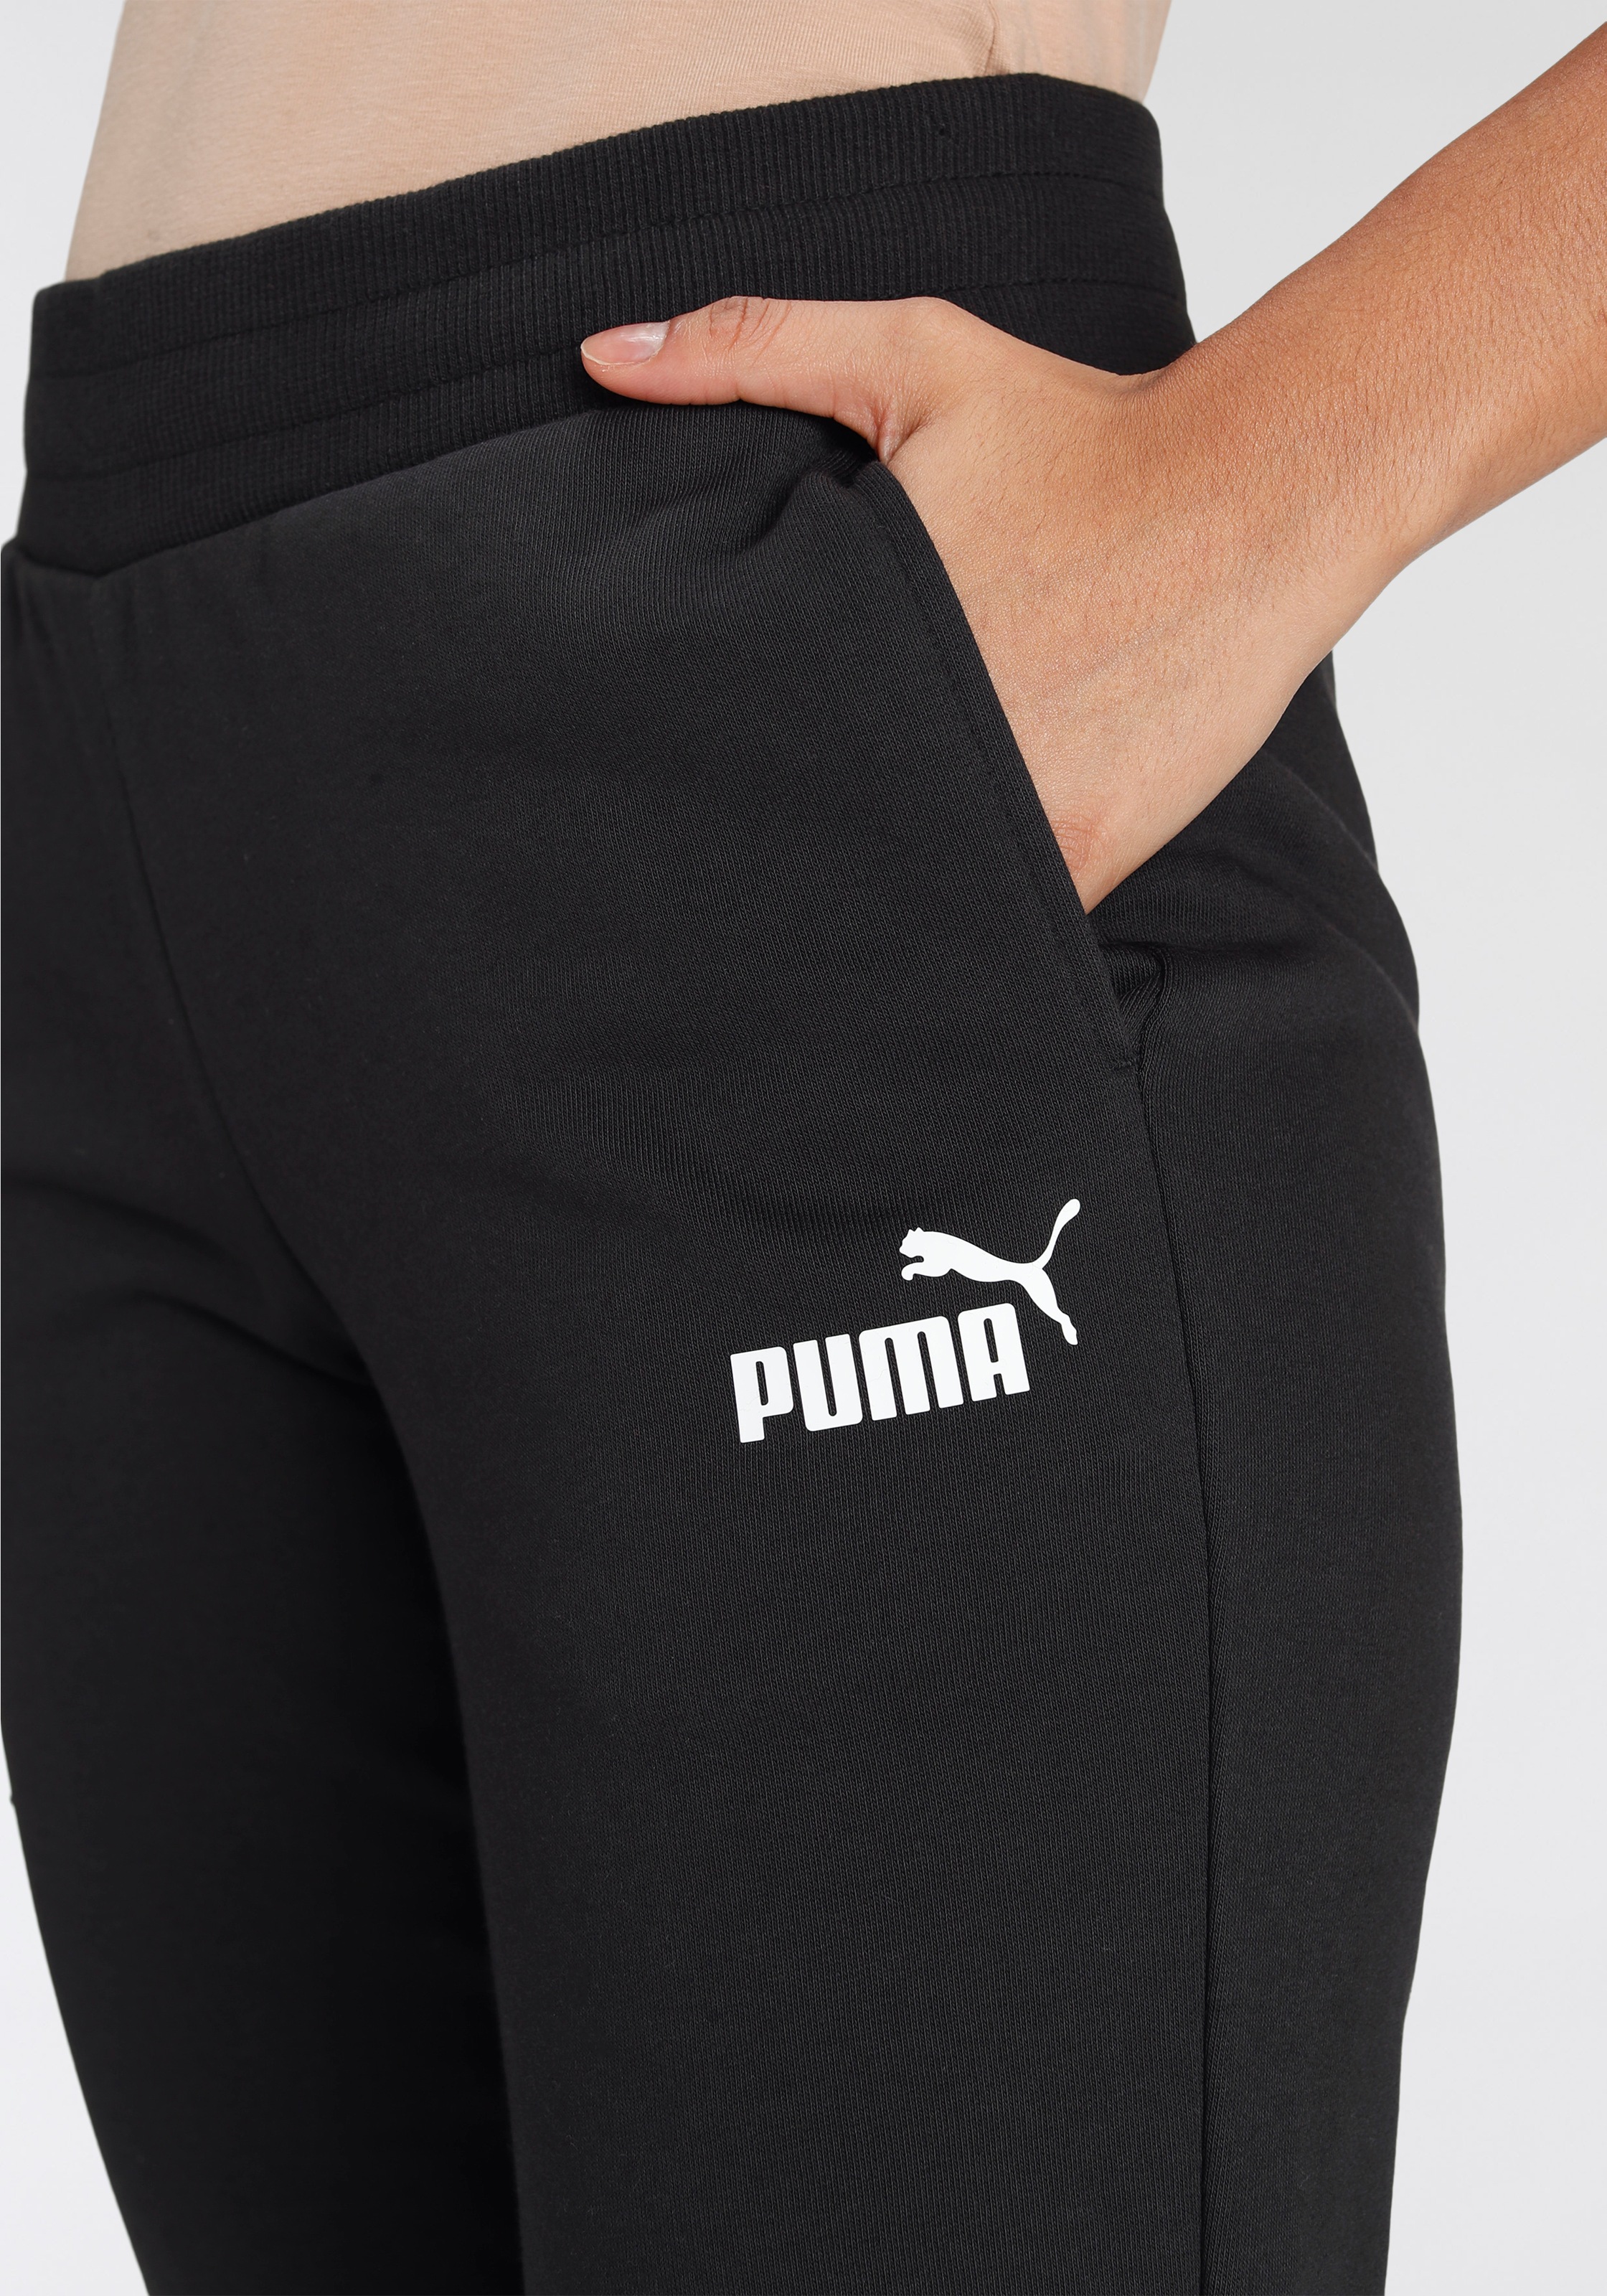 PUMA Jogginghose »PUMA POWER TAPE PANTS TR« kaufen im OTTO Online Shop